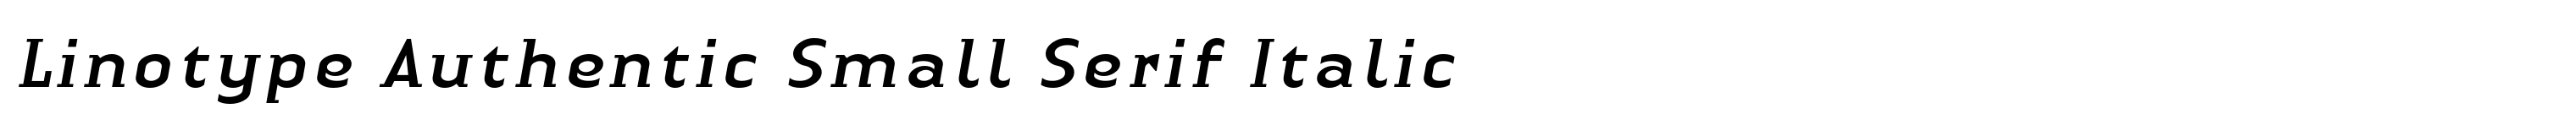 Linotype Authentic Small Serif Italic